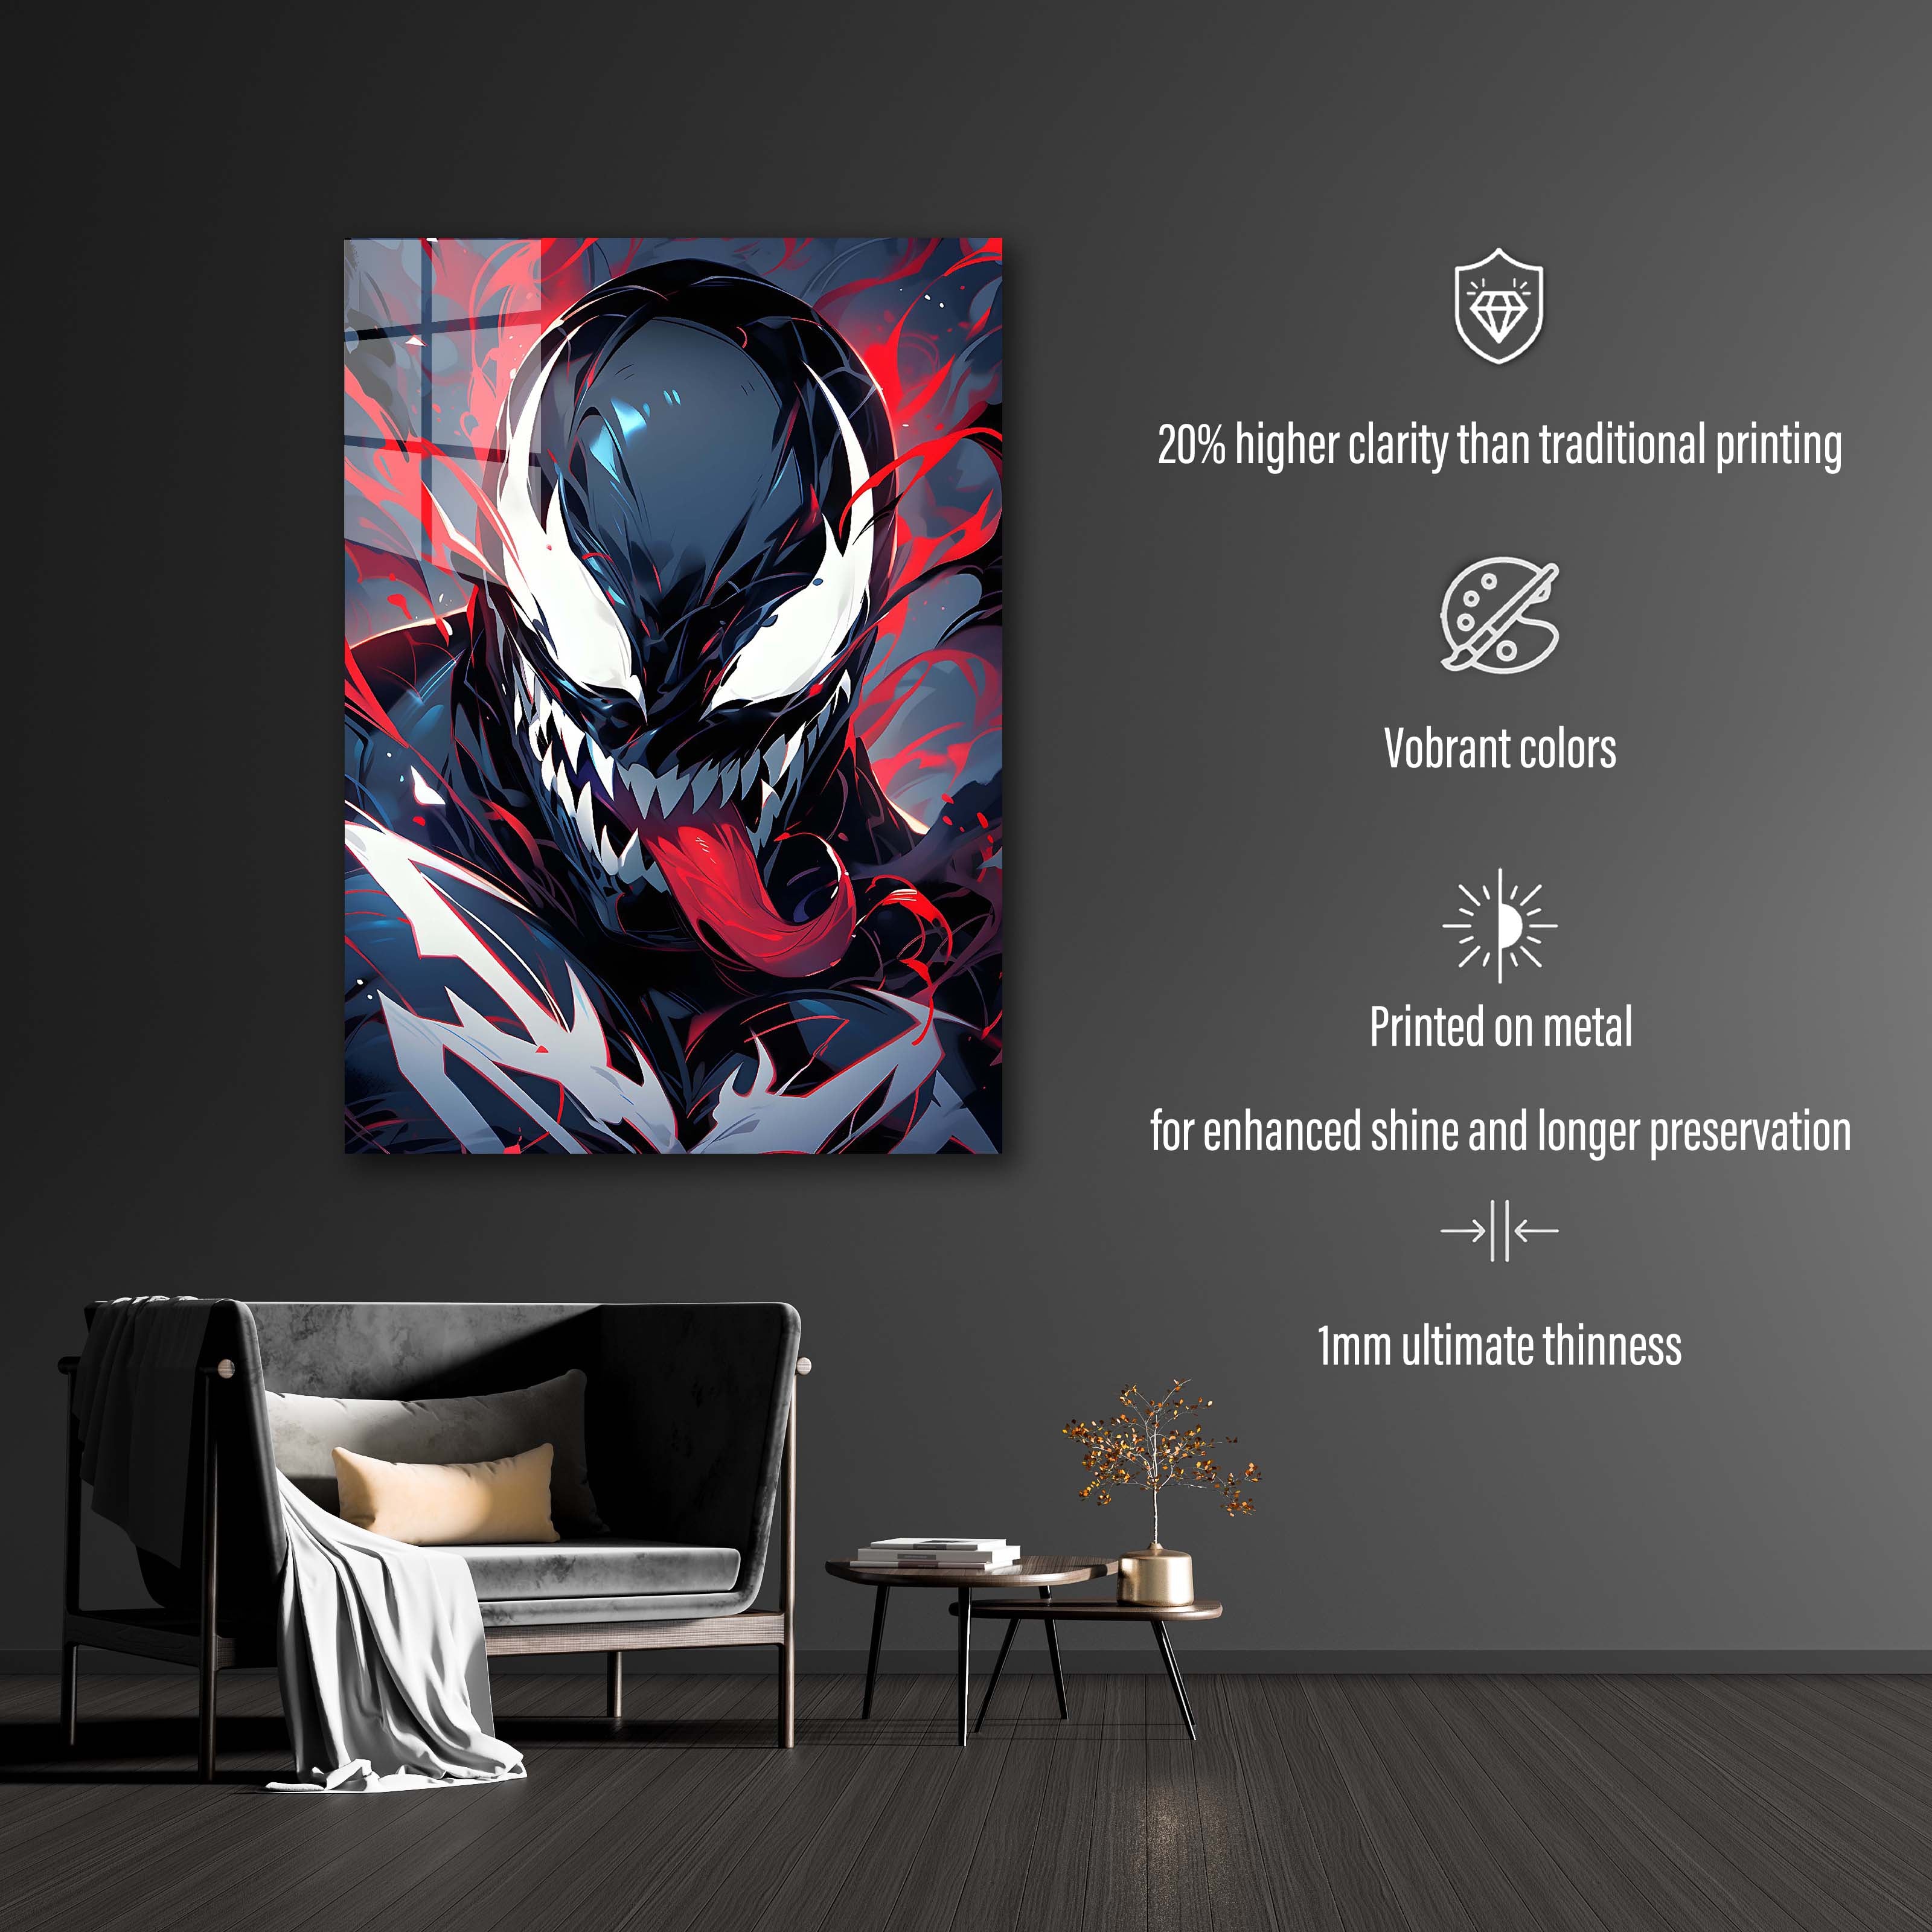 Venom-designed by @Artfinity